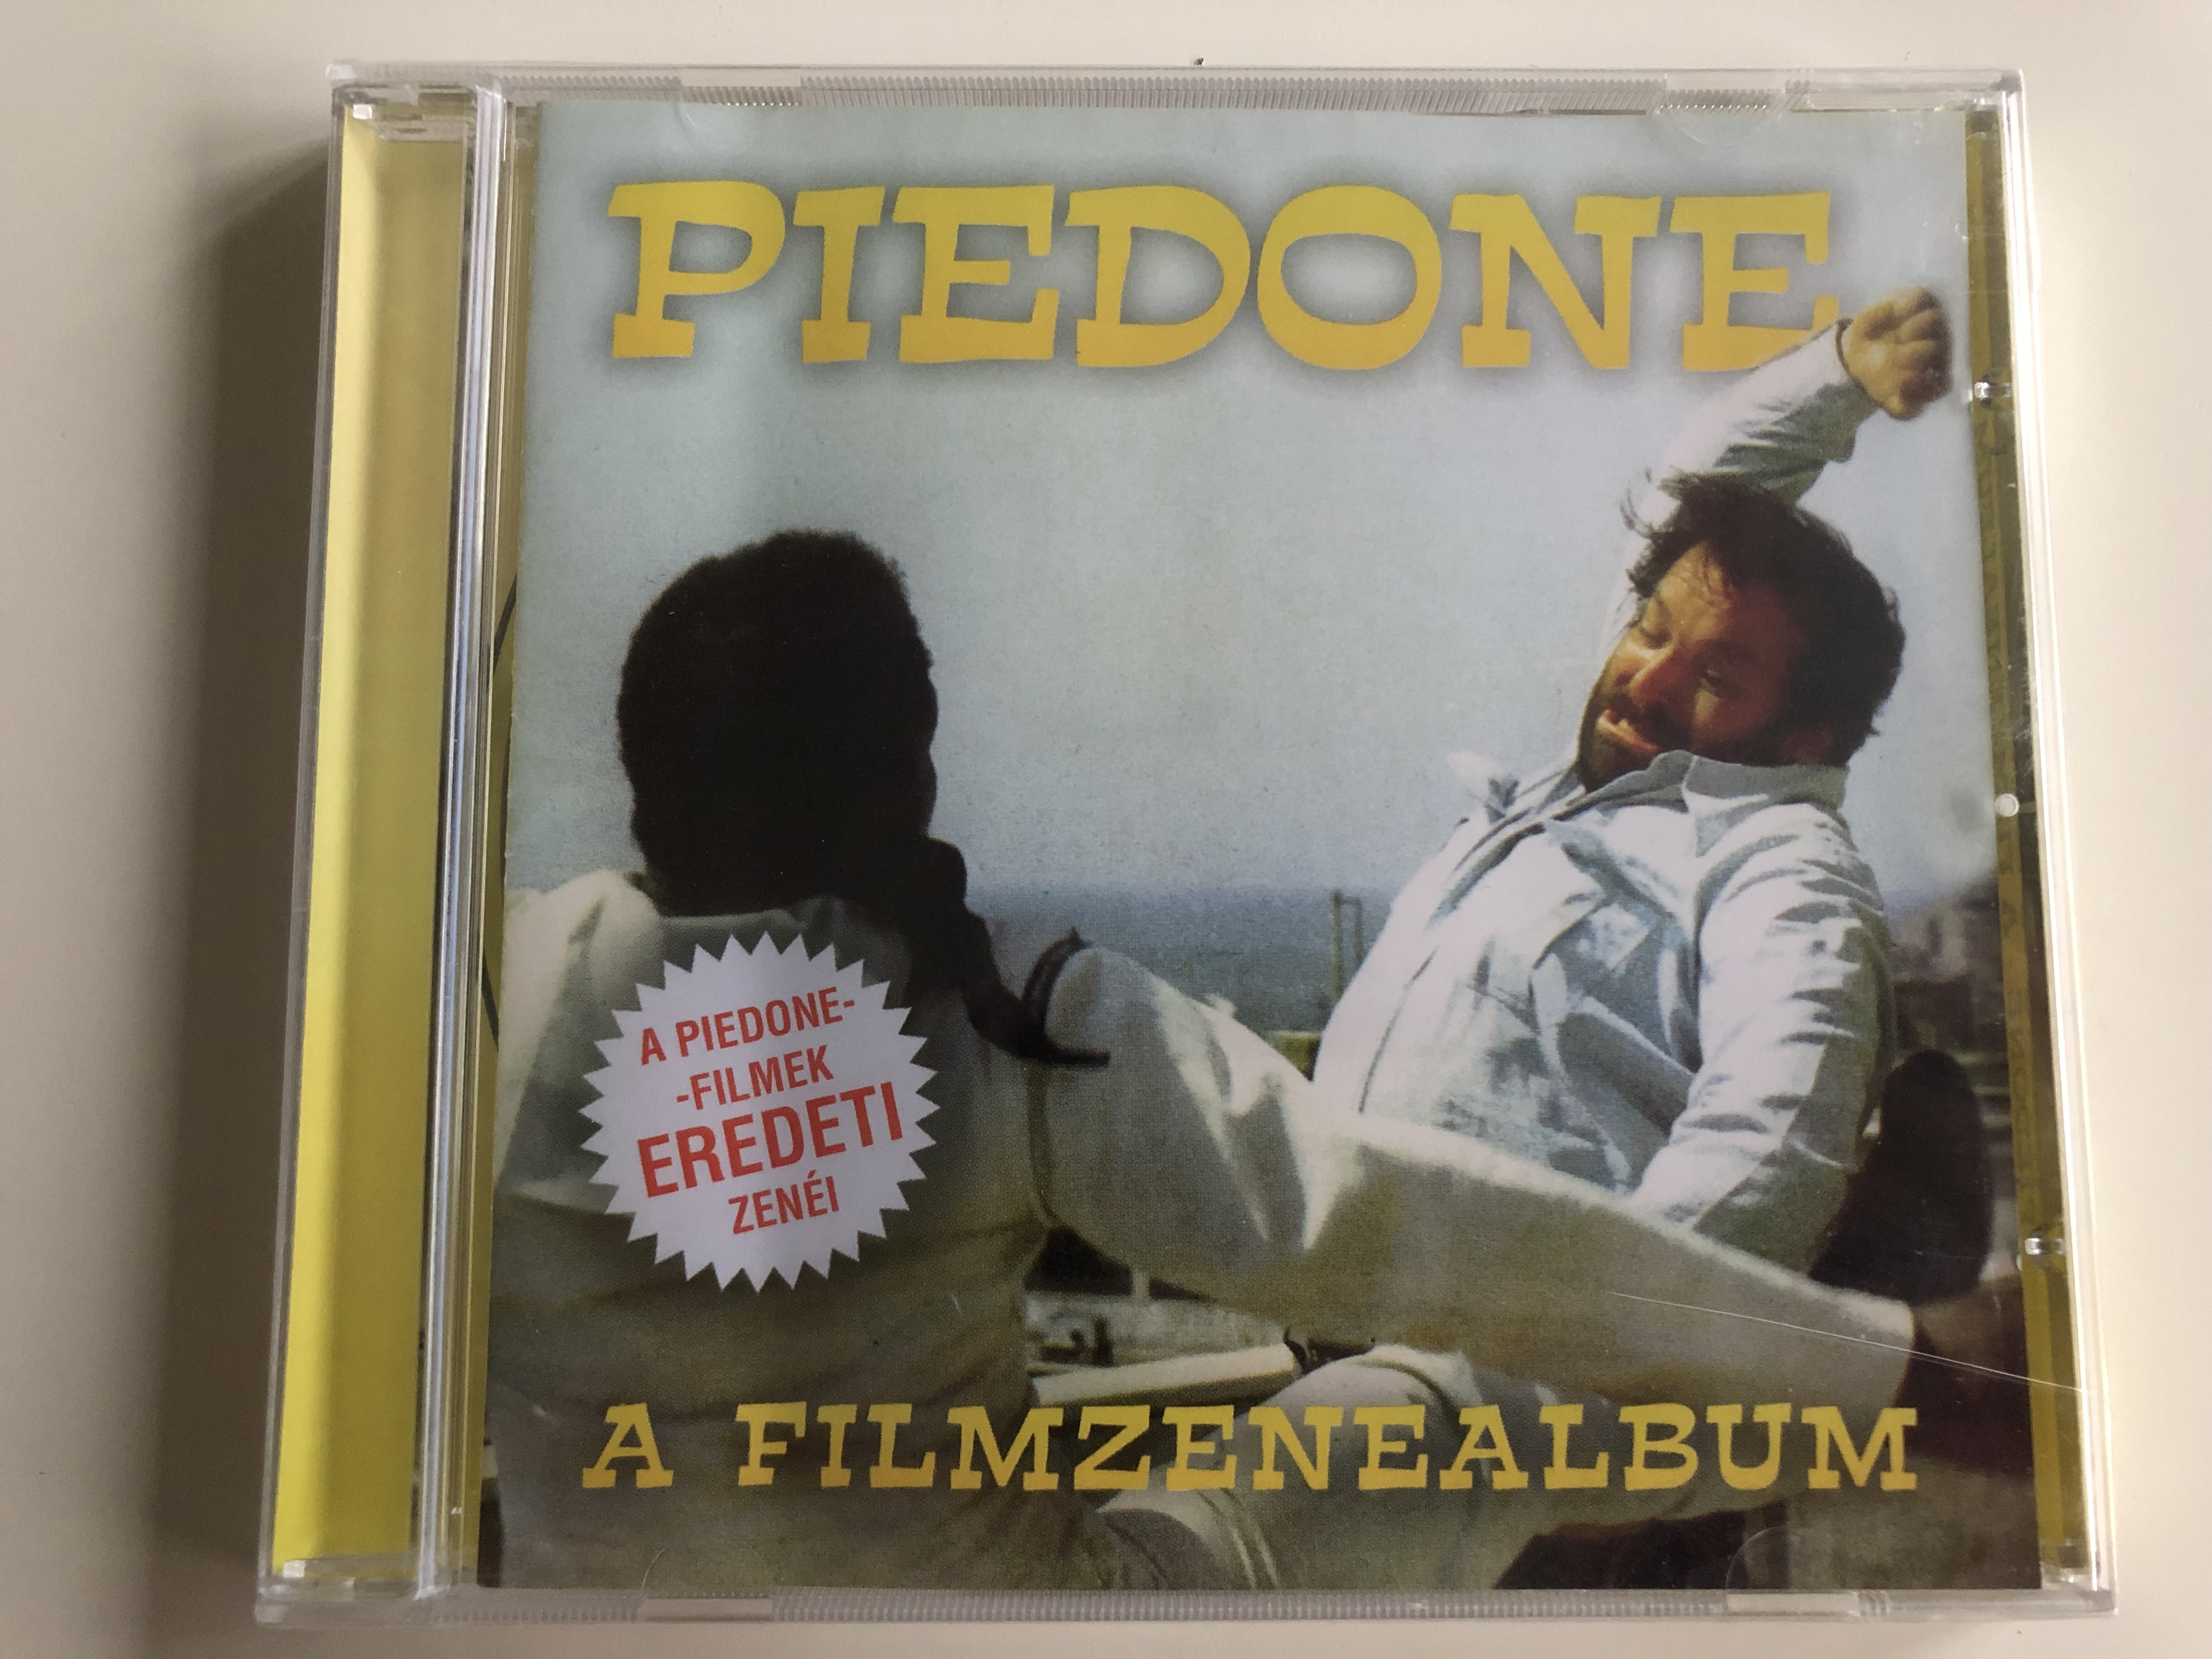 piedone-a-filmzene-album-piedone-movies-official-soundracks-a-piedone-filmek-eredeti-zen-i-piedone-a-zsaru-piedone-hongkongban-piedone-afrik-ban-piedone-egypitomban-audio-cd-hg796-1-.jpg